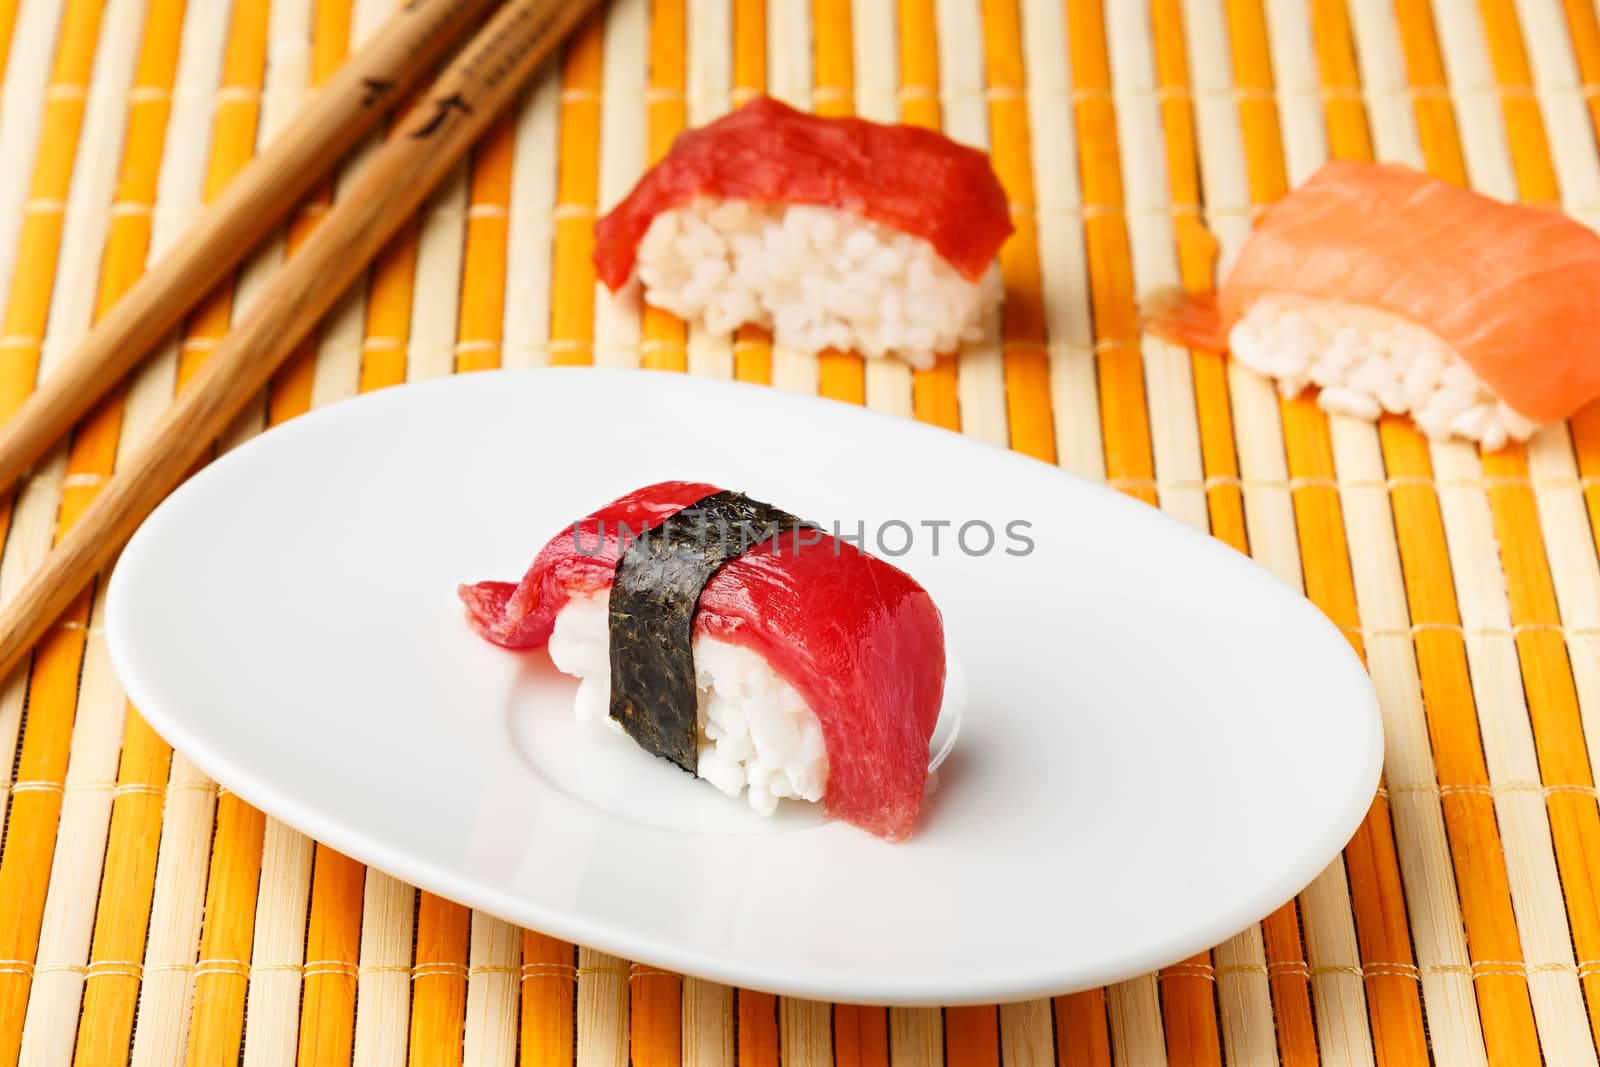  Red tuna Nigiri with Nori seaweed on white plate with chopsticks and other Nigiris. Raw fish in traditional Japanese sushi style. Horizontal image.